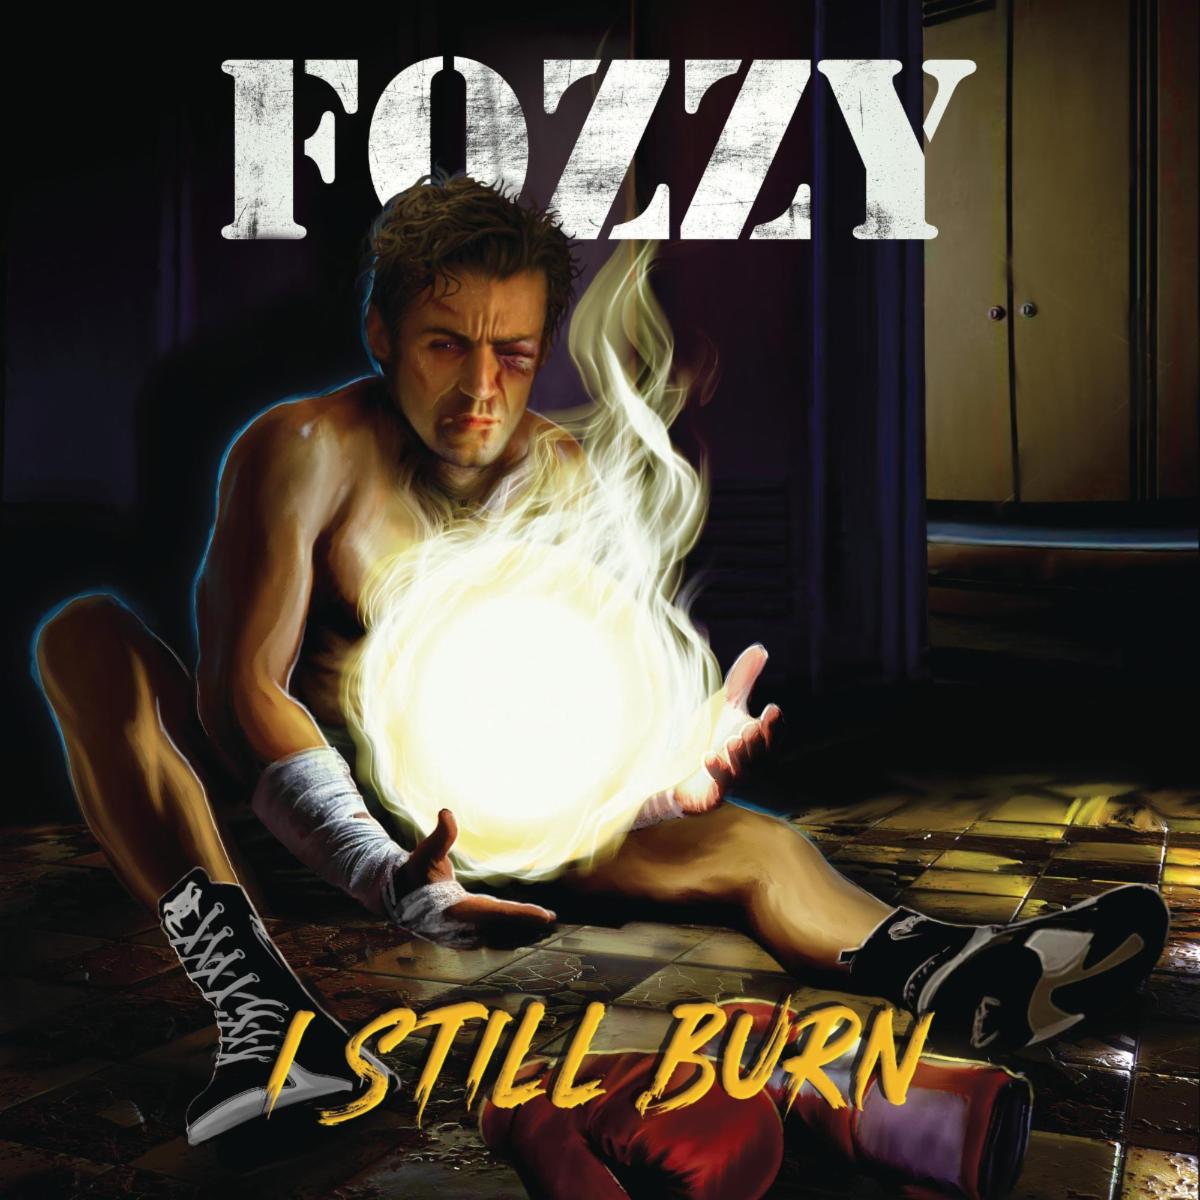 FOZZY Release Anthemic New Single "I STILL BURN" - Landmark Hit "Judas" Reaches Gold Certified